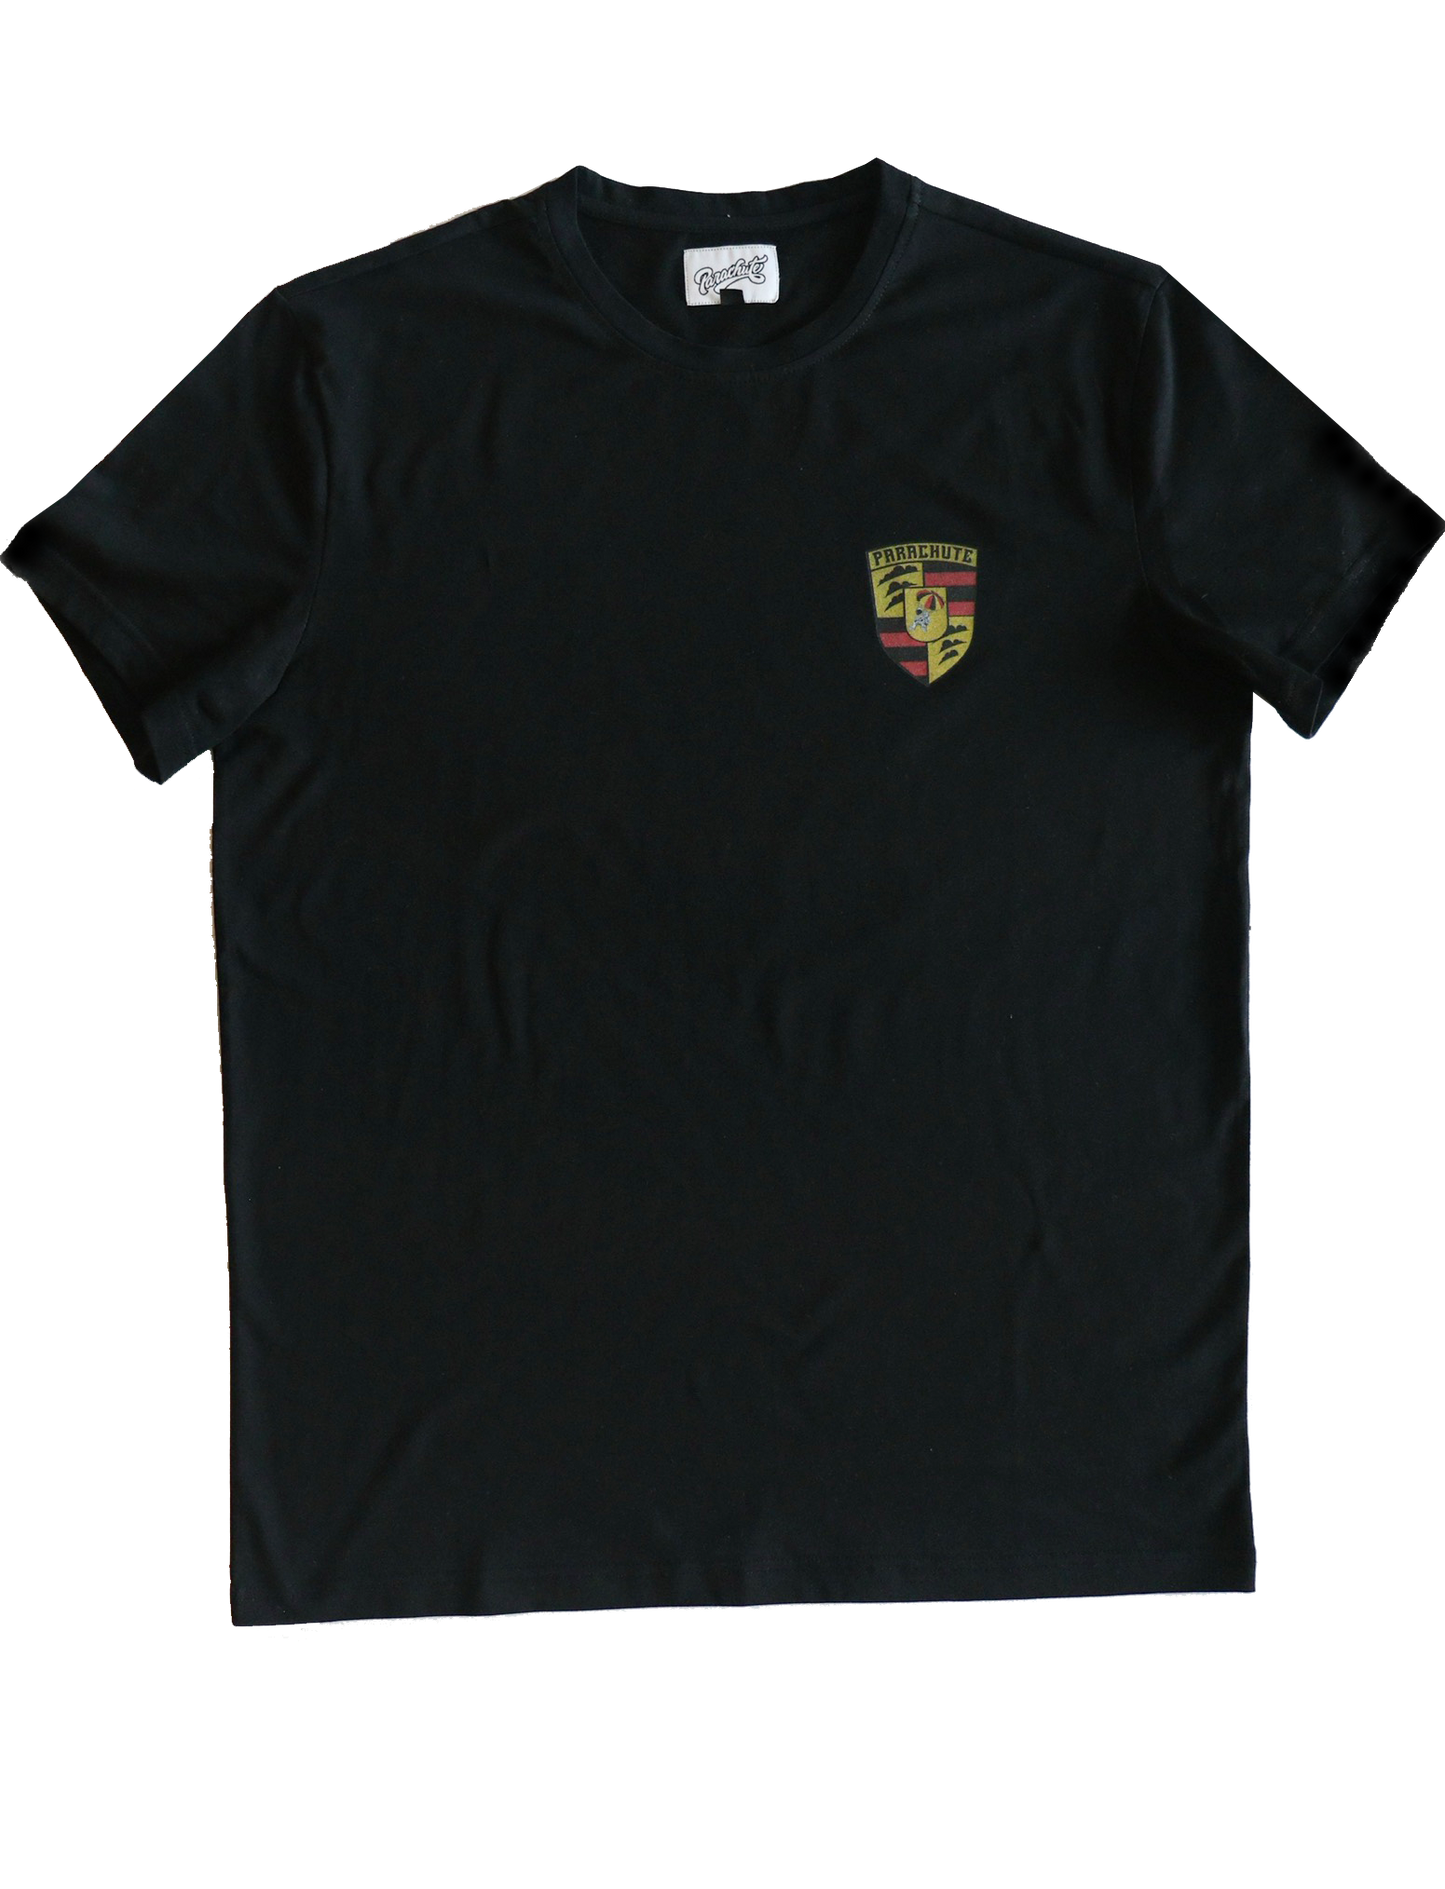 Classic Parachute T-shirt (Black)